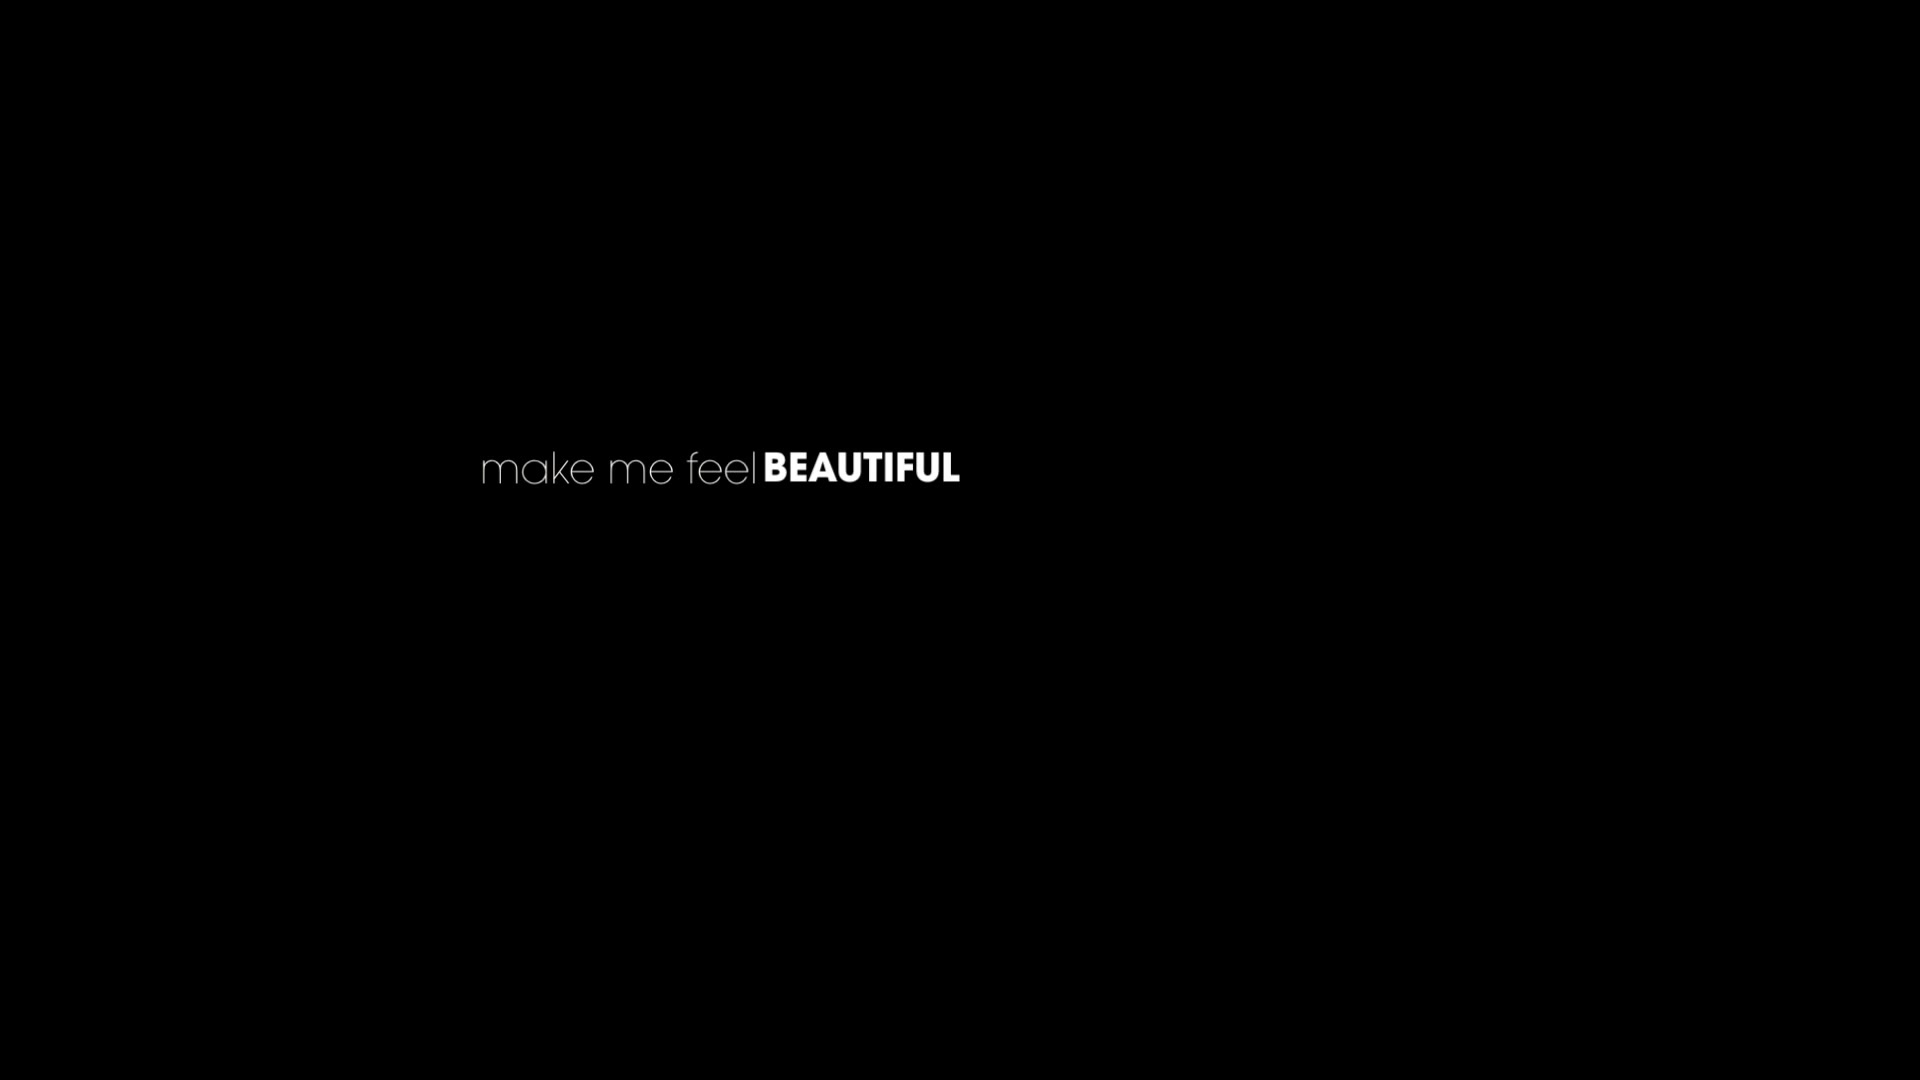 XPORN - Make Me Feel Beautiful (Jessica)